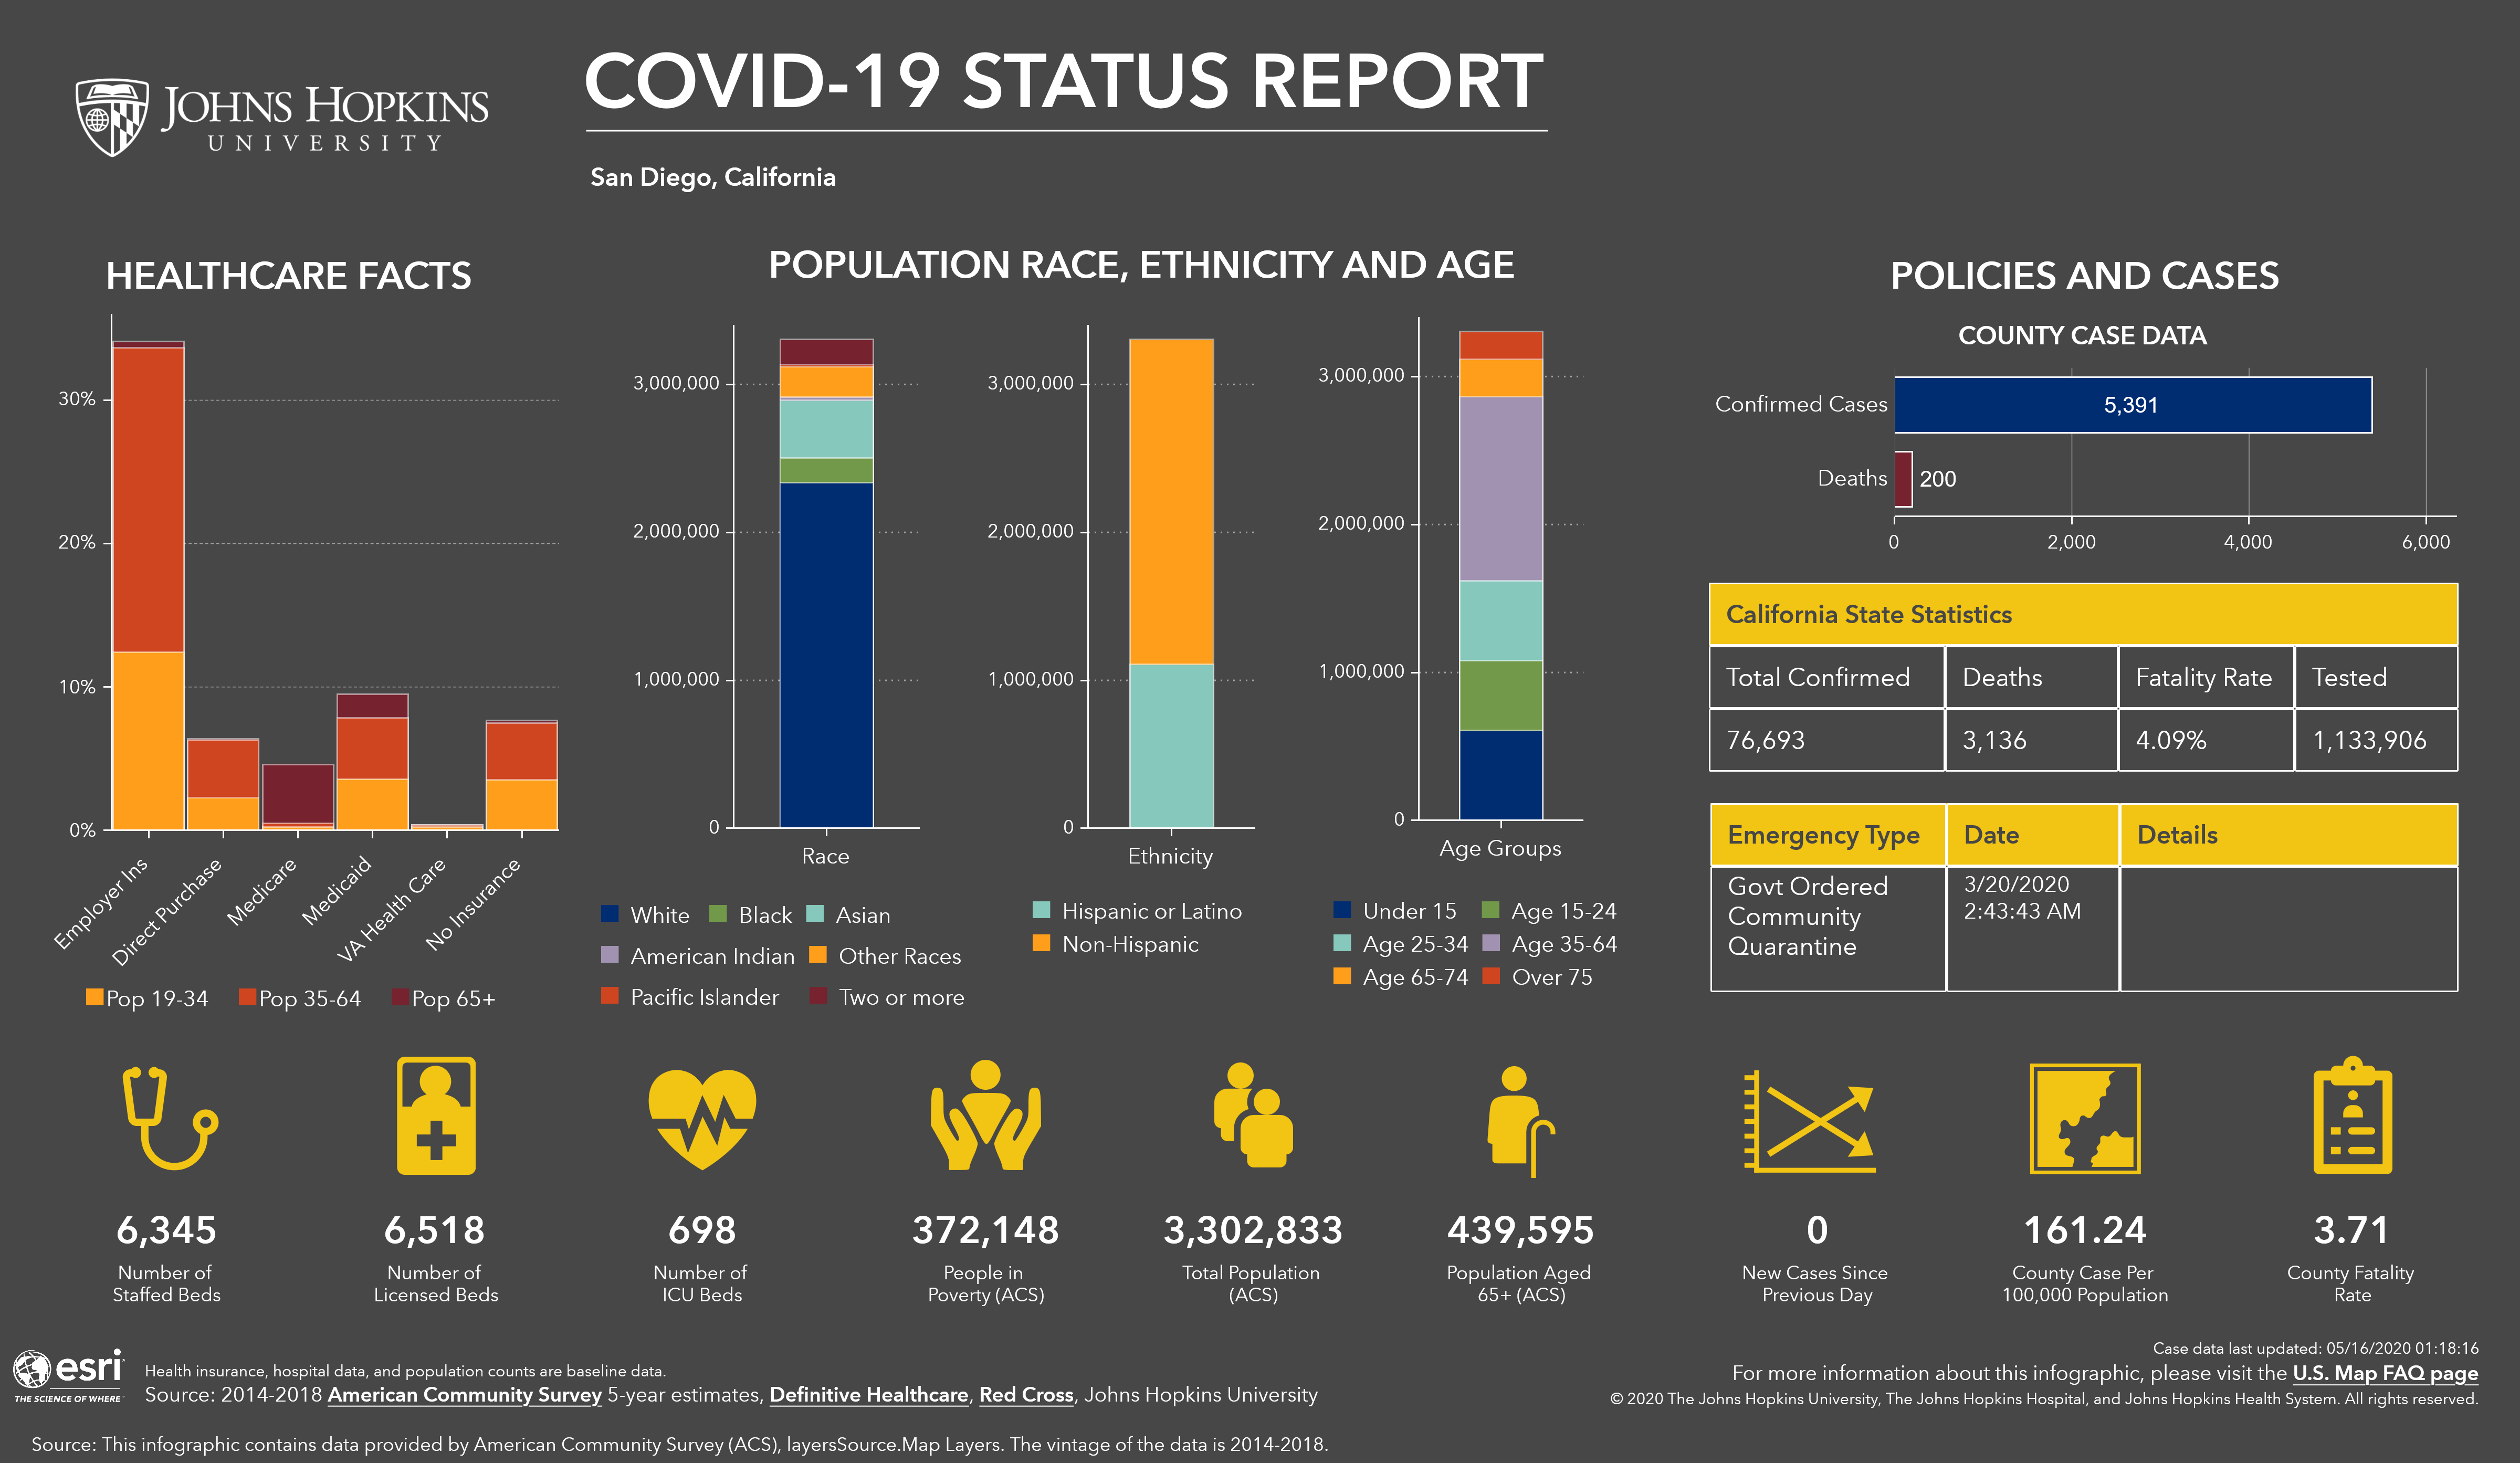 JHU COVID-19 Dashboard Infographic v2.4